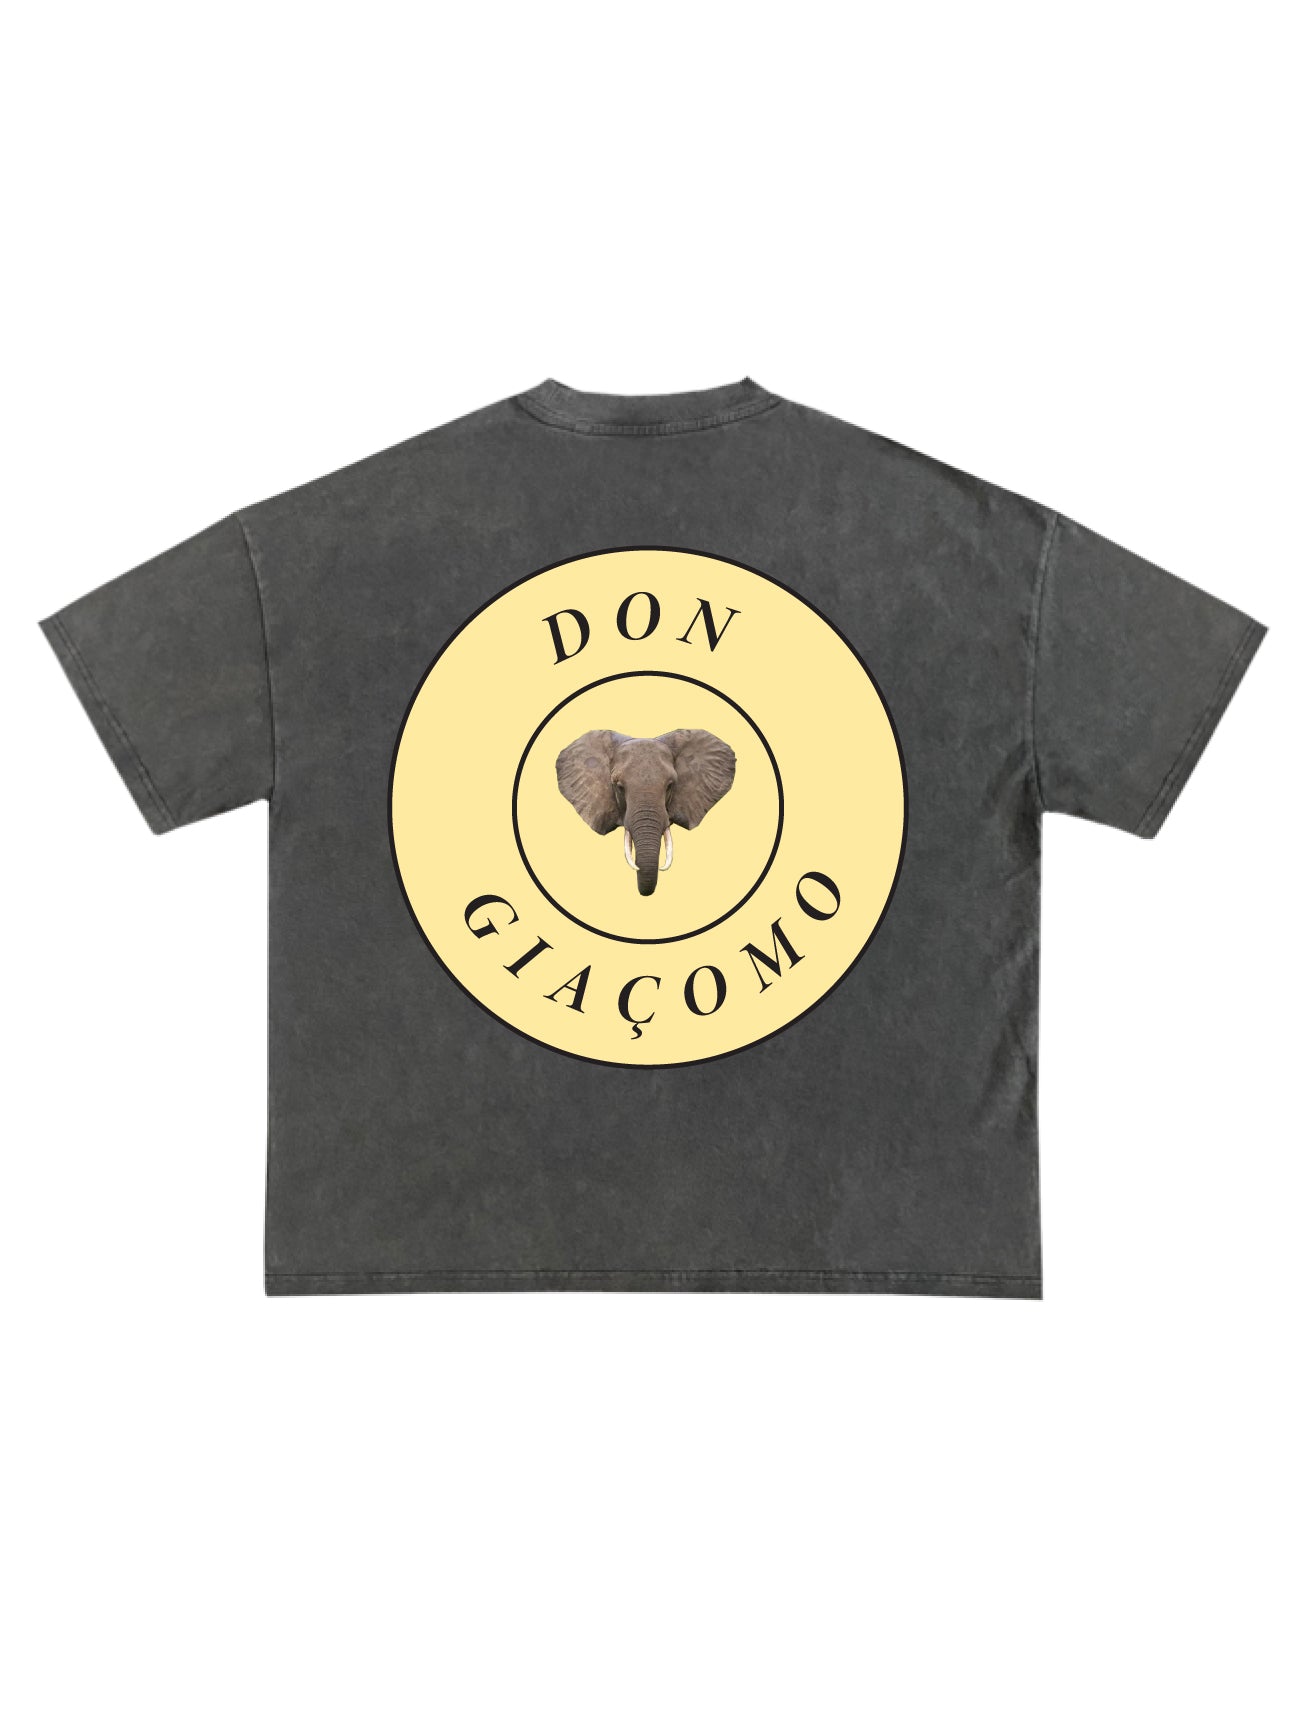 Don Giacomo Cream Circle Graphic T-Shirt (3 colors)